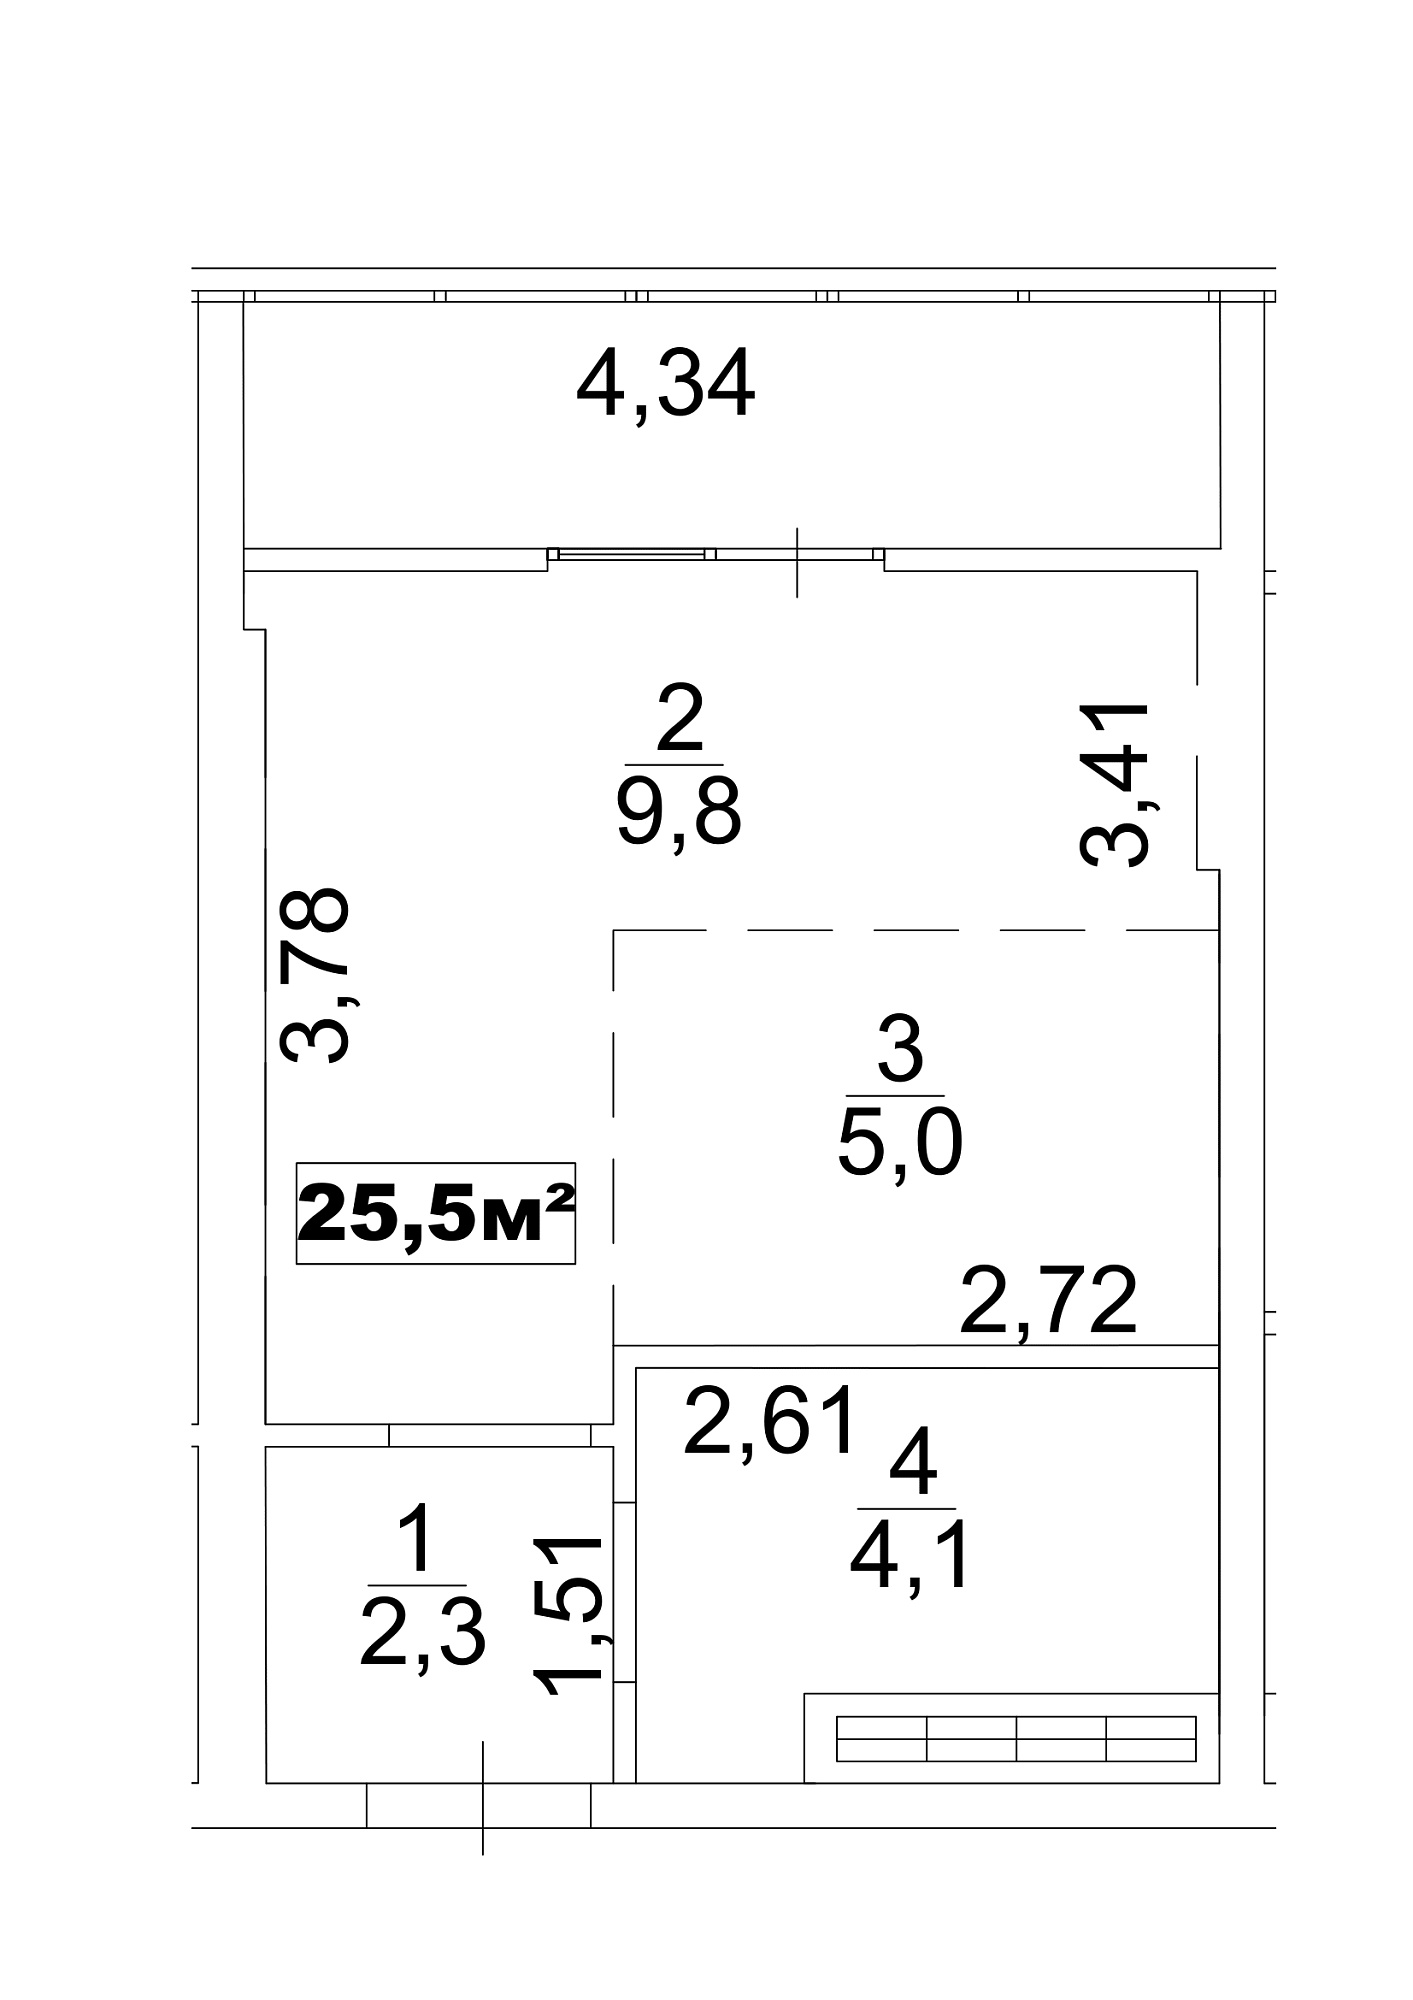 Planning Smart flats area 25.5m2, AB-13-06/0045в.